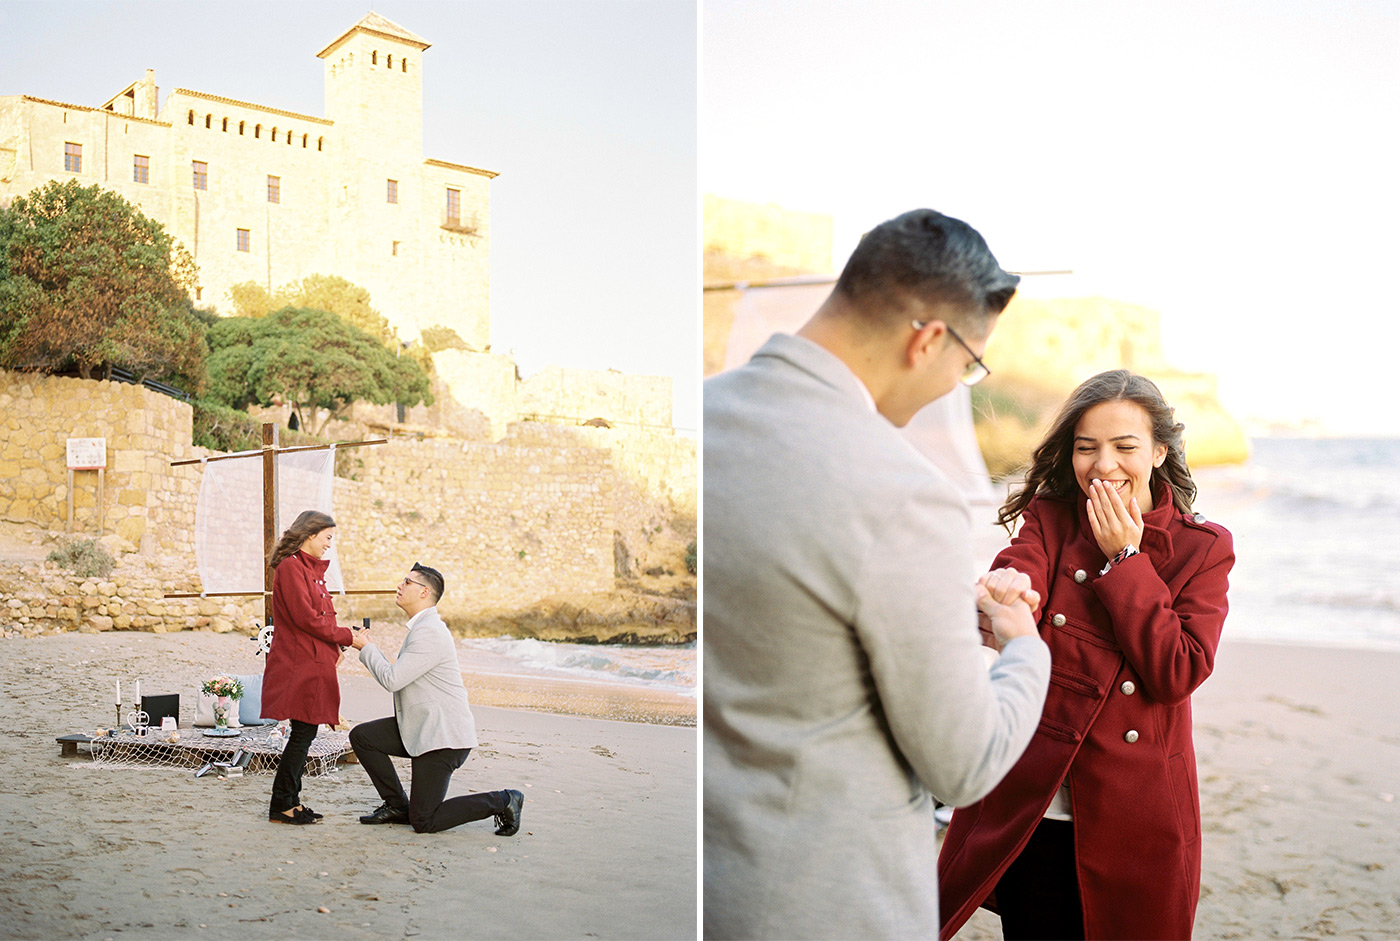 Castell de Tamarit Wedding Photography | Secret Proposal Photography | Film Photographer Spain | Kodak Portra 400